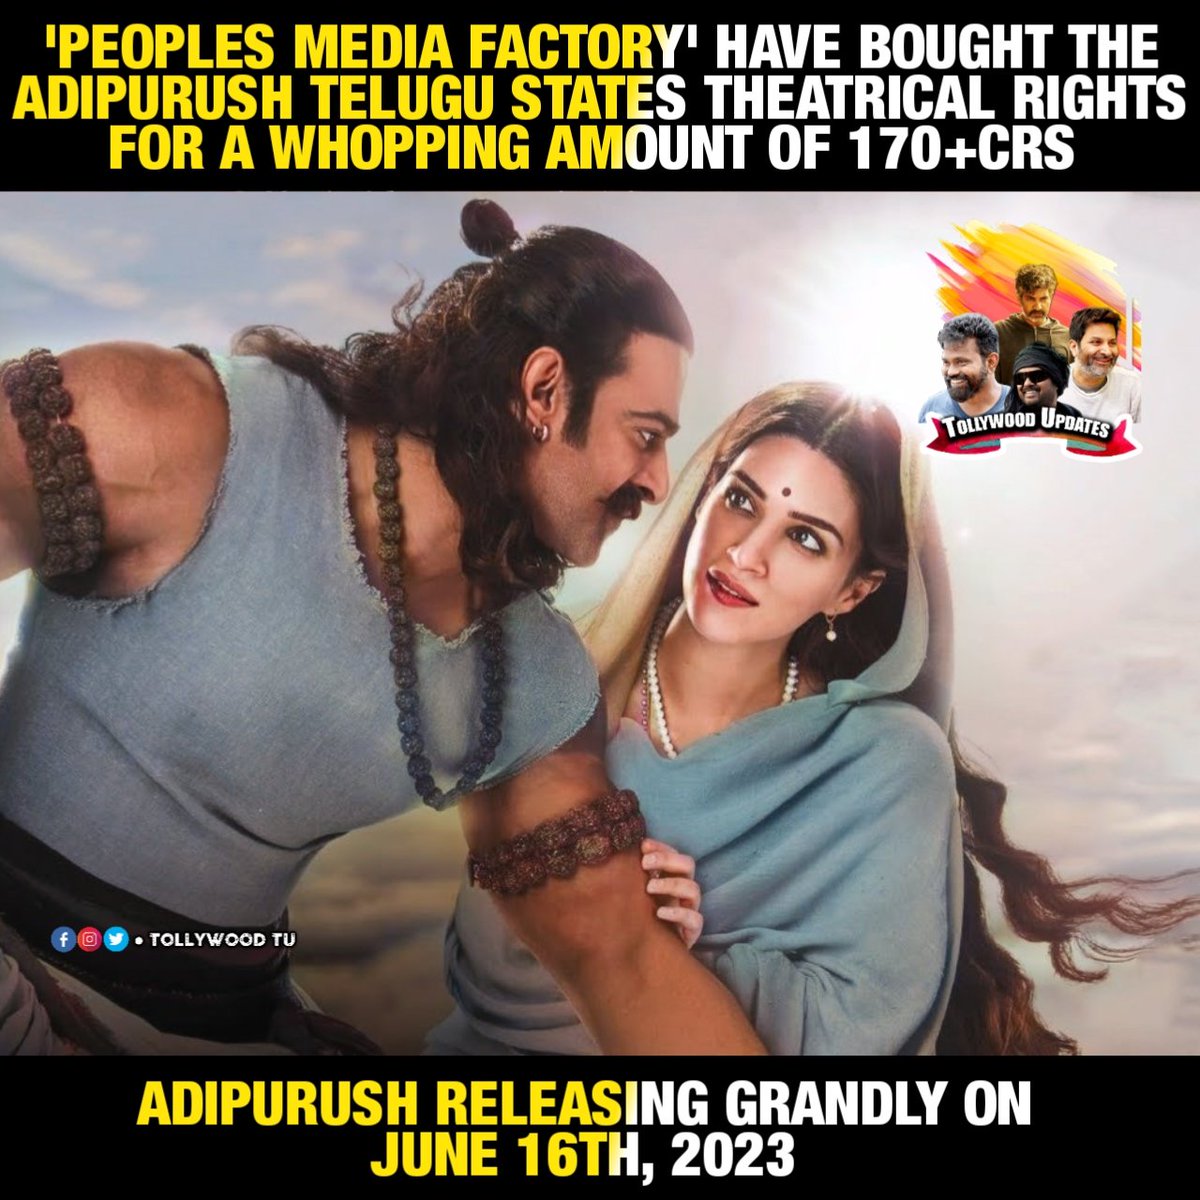 #Adipurush telugu states theatrical rights bought by #PeoplesMediaFactory for around 170+ crs. 

Hugeeeee Deal 🔥🔥🔥

#Prabhas #KritiSanon #OmRaut #SaifAliKhan